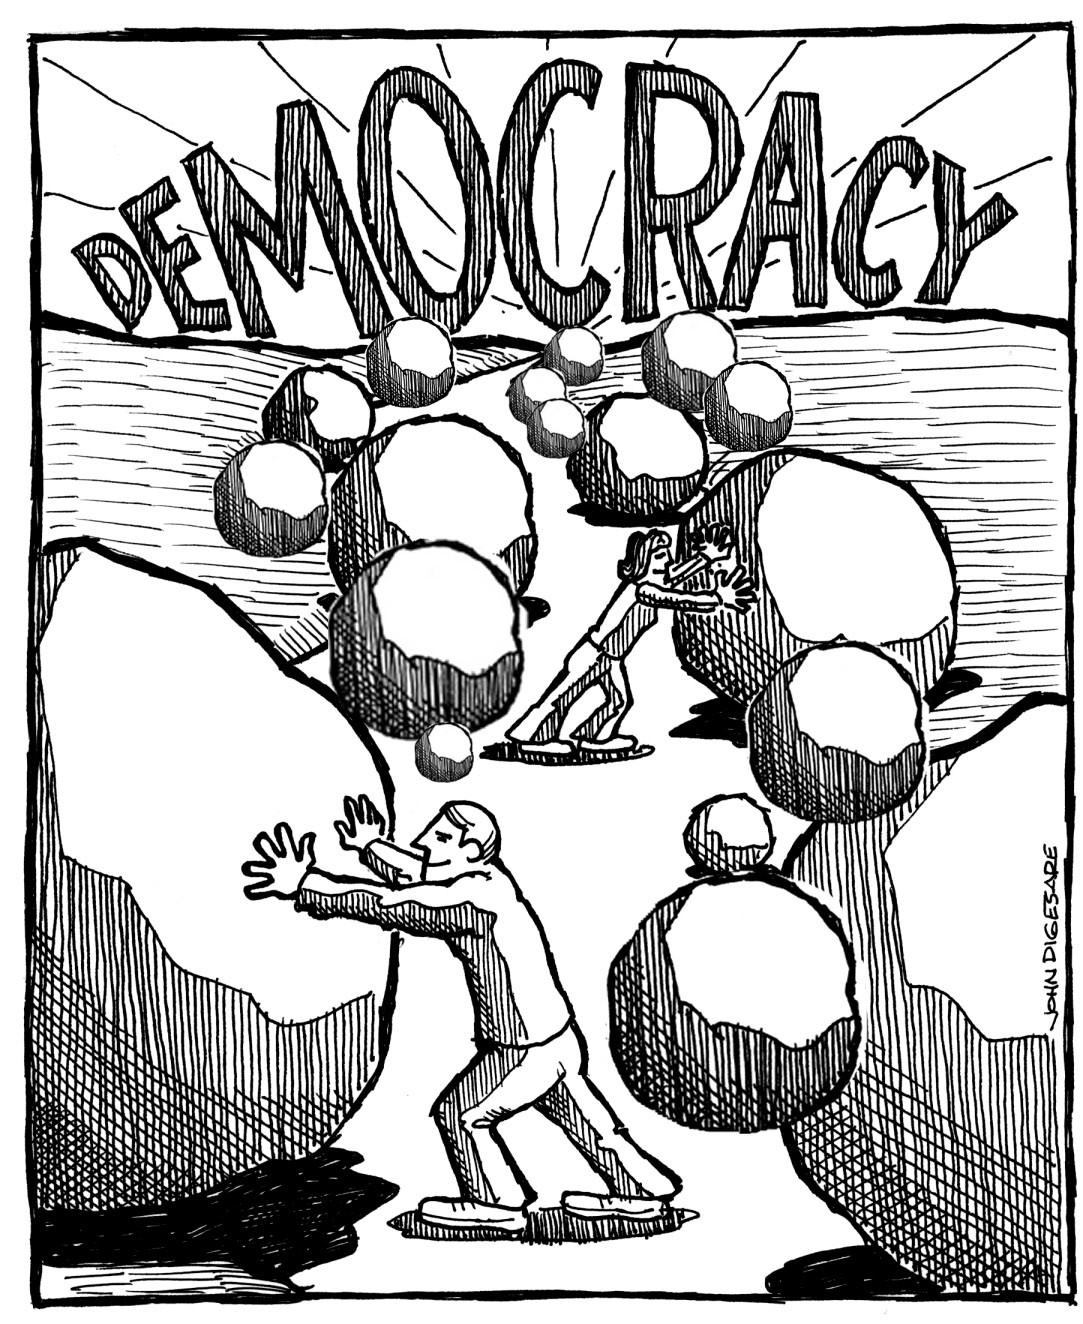 democracy is a work of art maturana